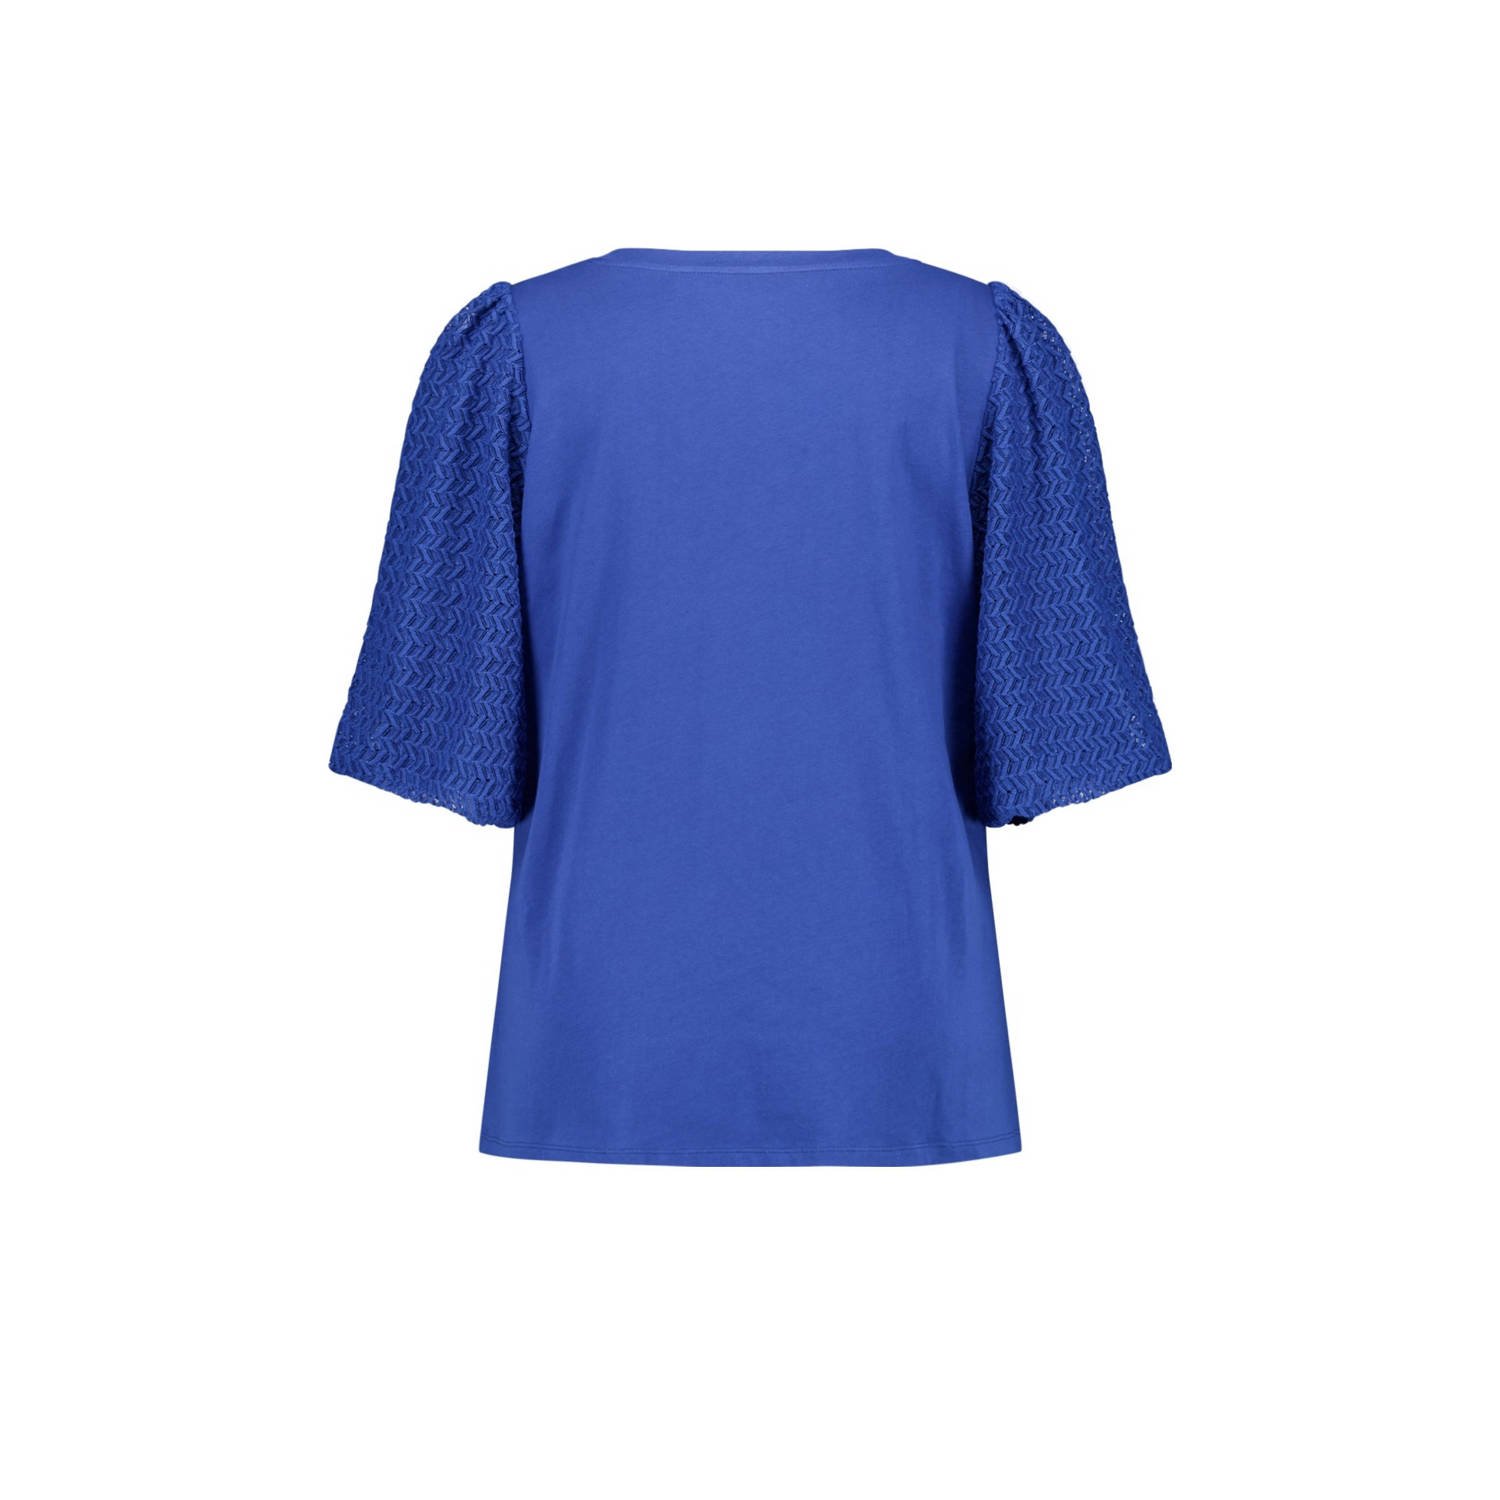 MS Mode T-shirt blauw